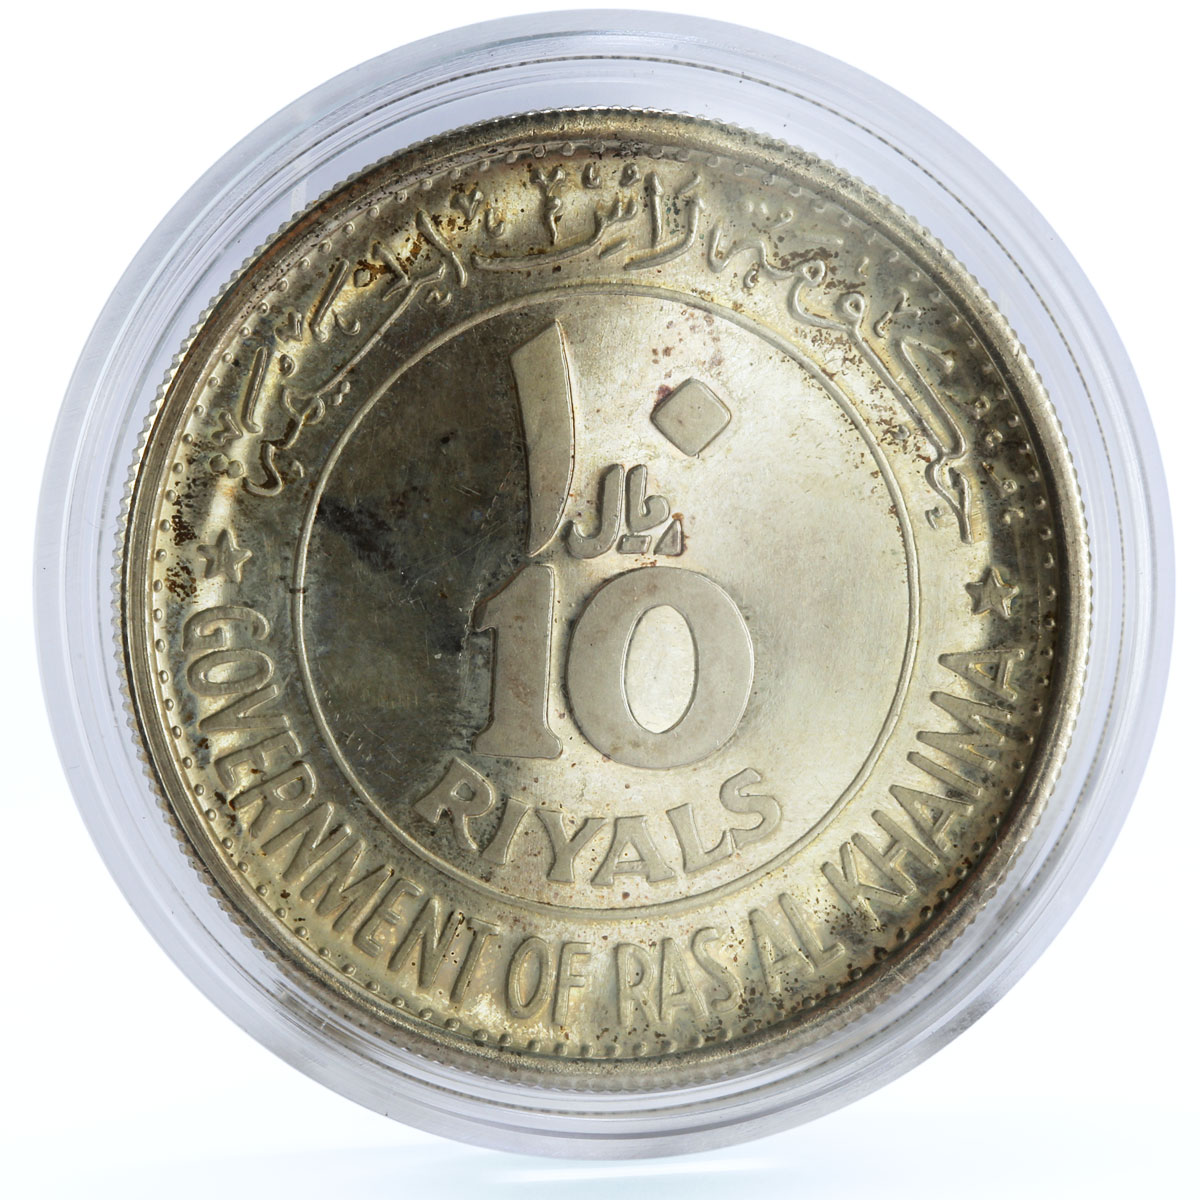 Ras al-Khaimah 10 riyals Rome City Emperor Augustus Sculpture silver coin 1970